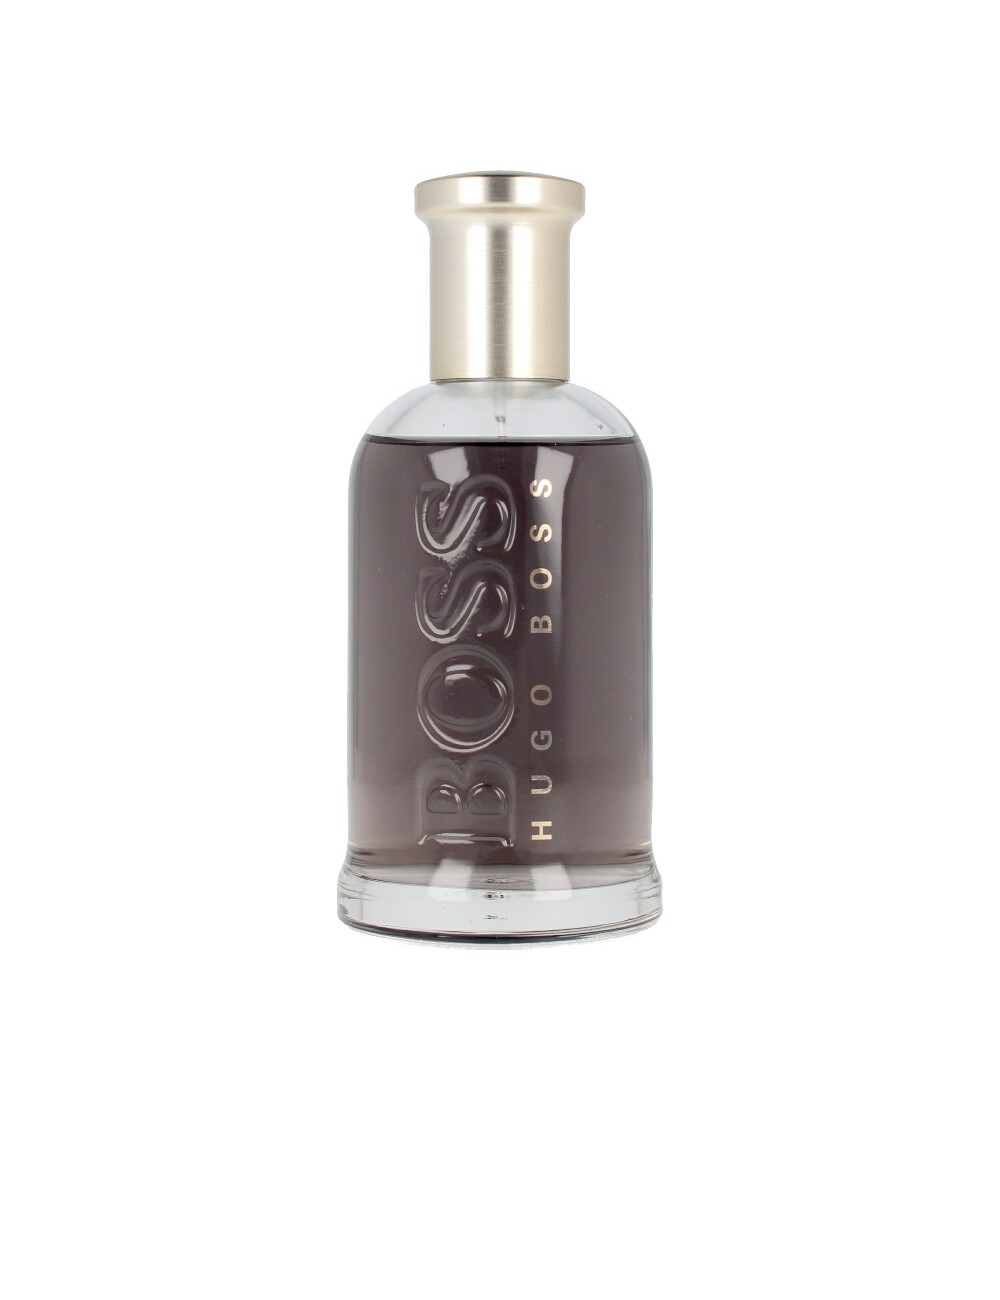 BOSS BOTTLED eau de parfum 200 ml NE125997